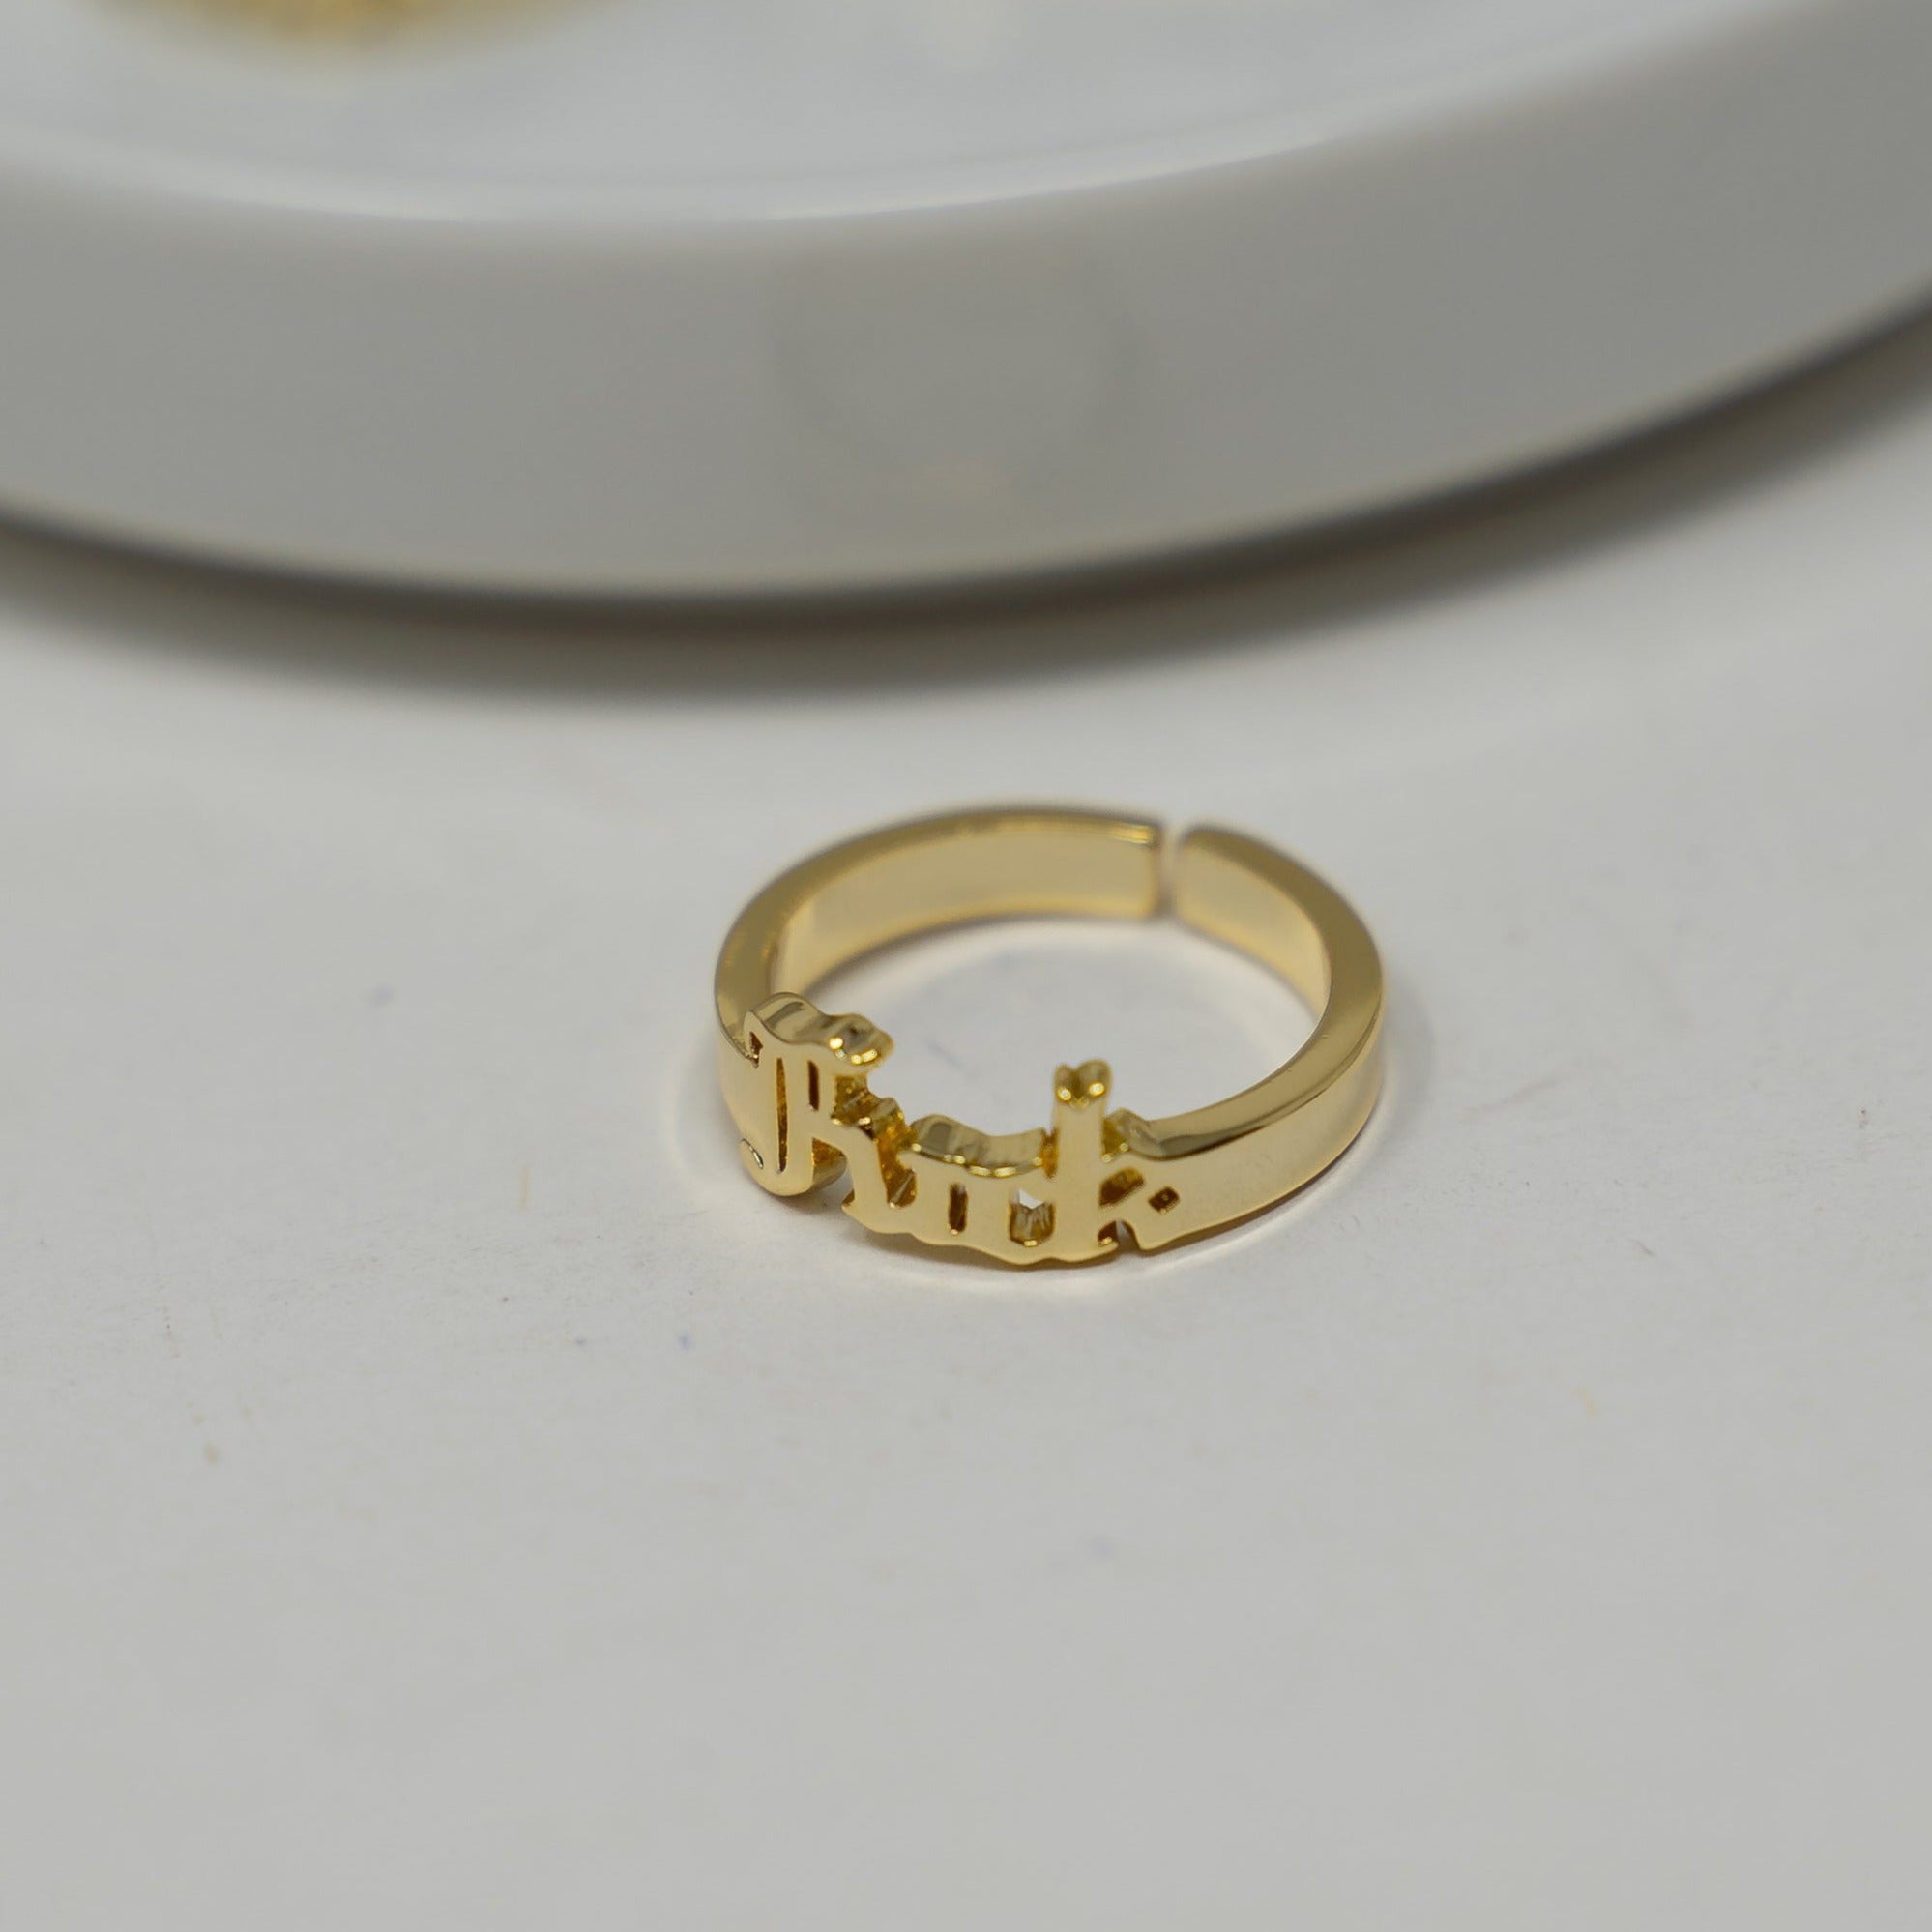 Angeline Yellow Gold: Bezel engagement ring with Old European Diamond | Ken  & Dana Design